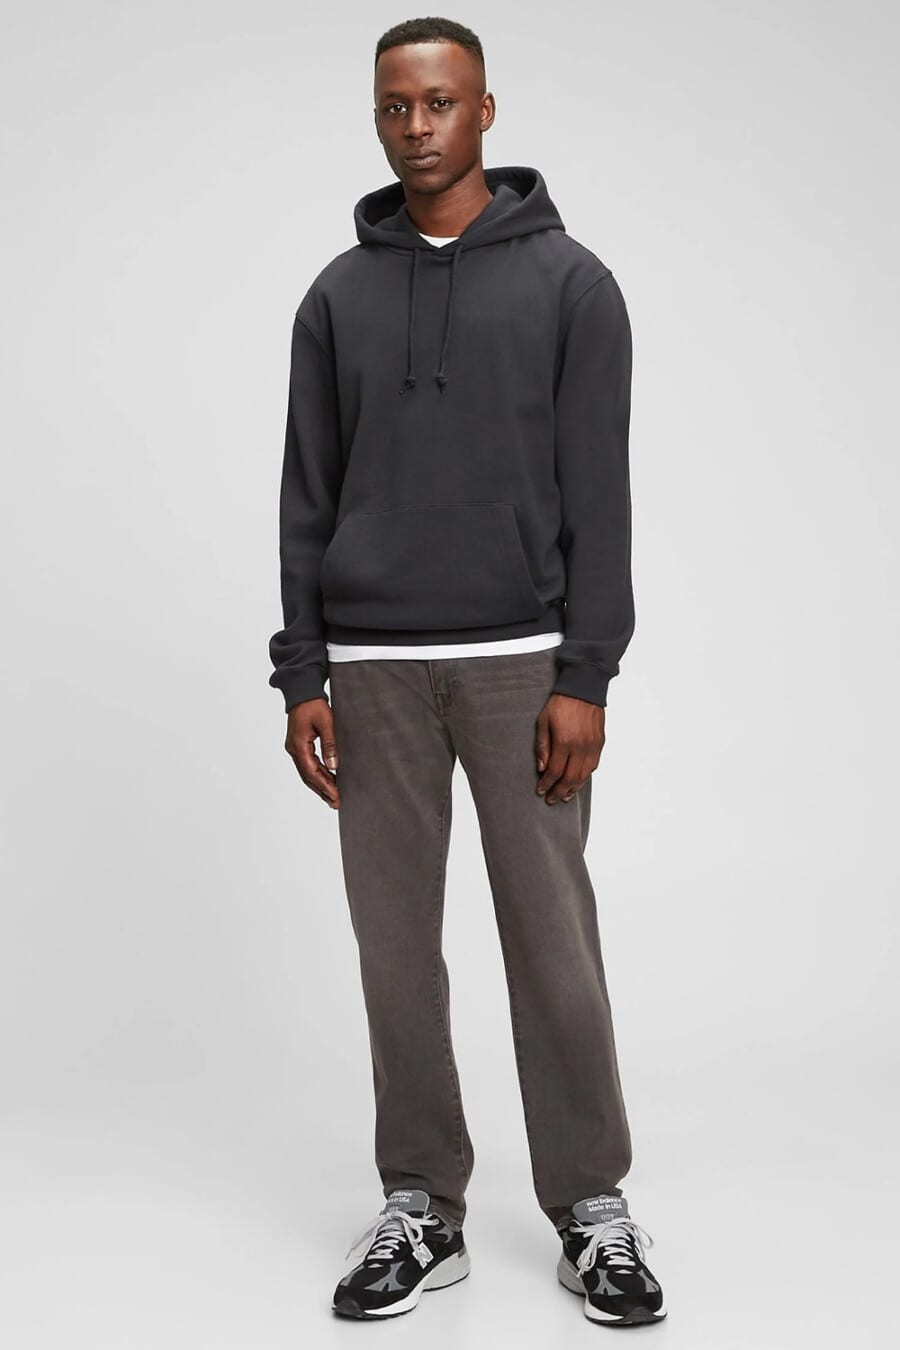 Men's loose dark grey jeans, white T-shirt, black hoodie and black running sneakers outfit